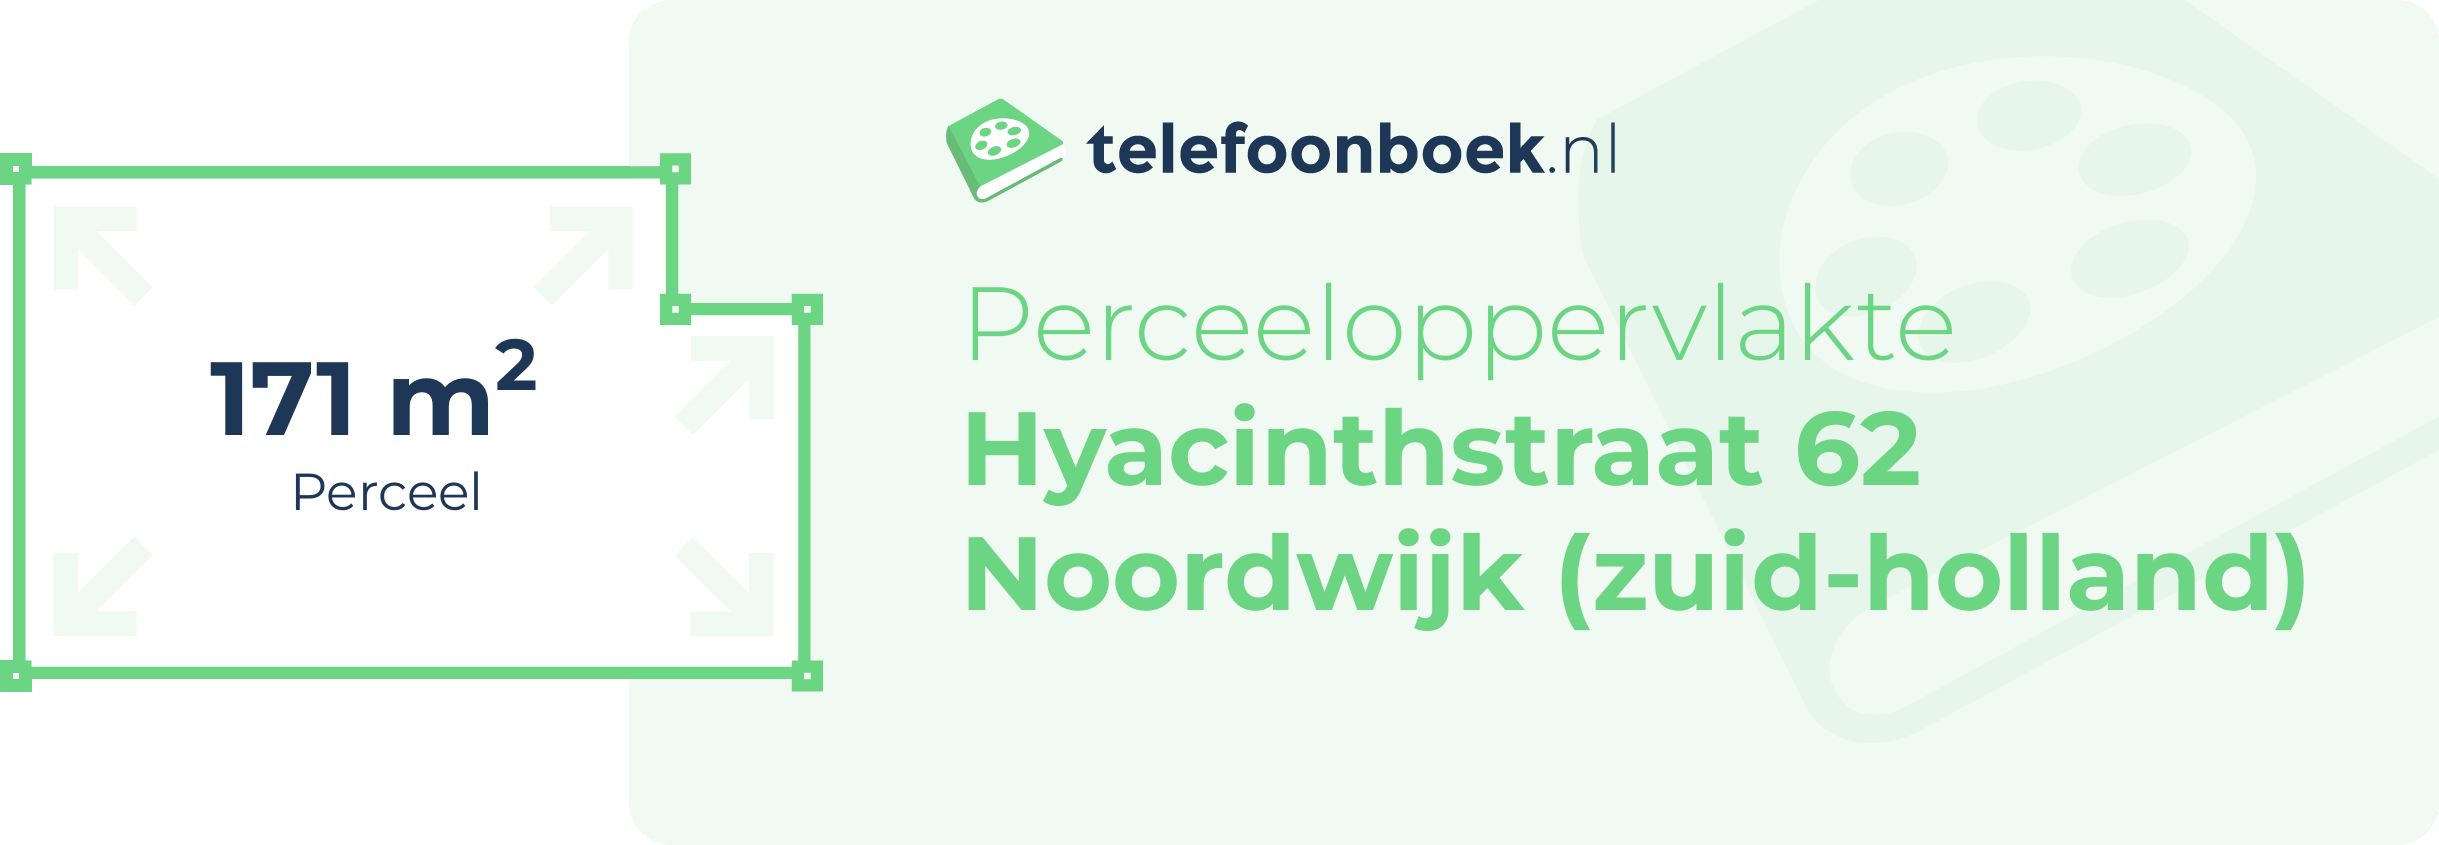 Perceeloppervlakte Hyacinthstraat 62 Noordwijk (Zuid-Holland)